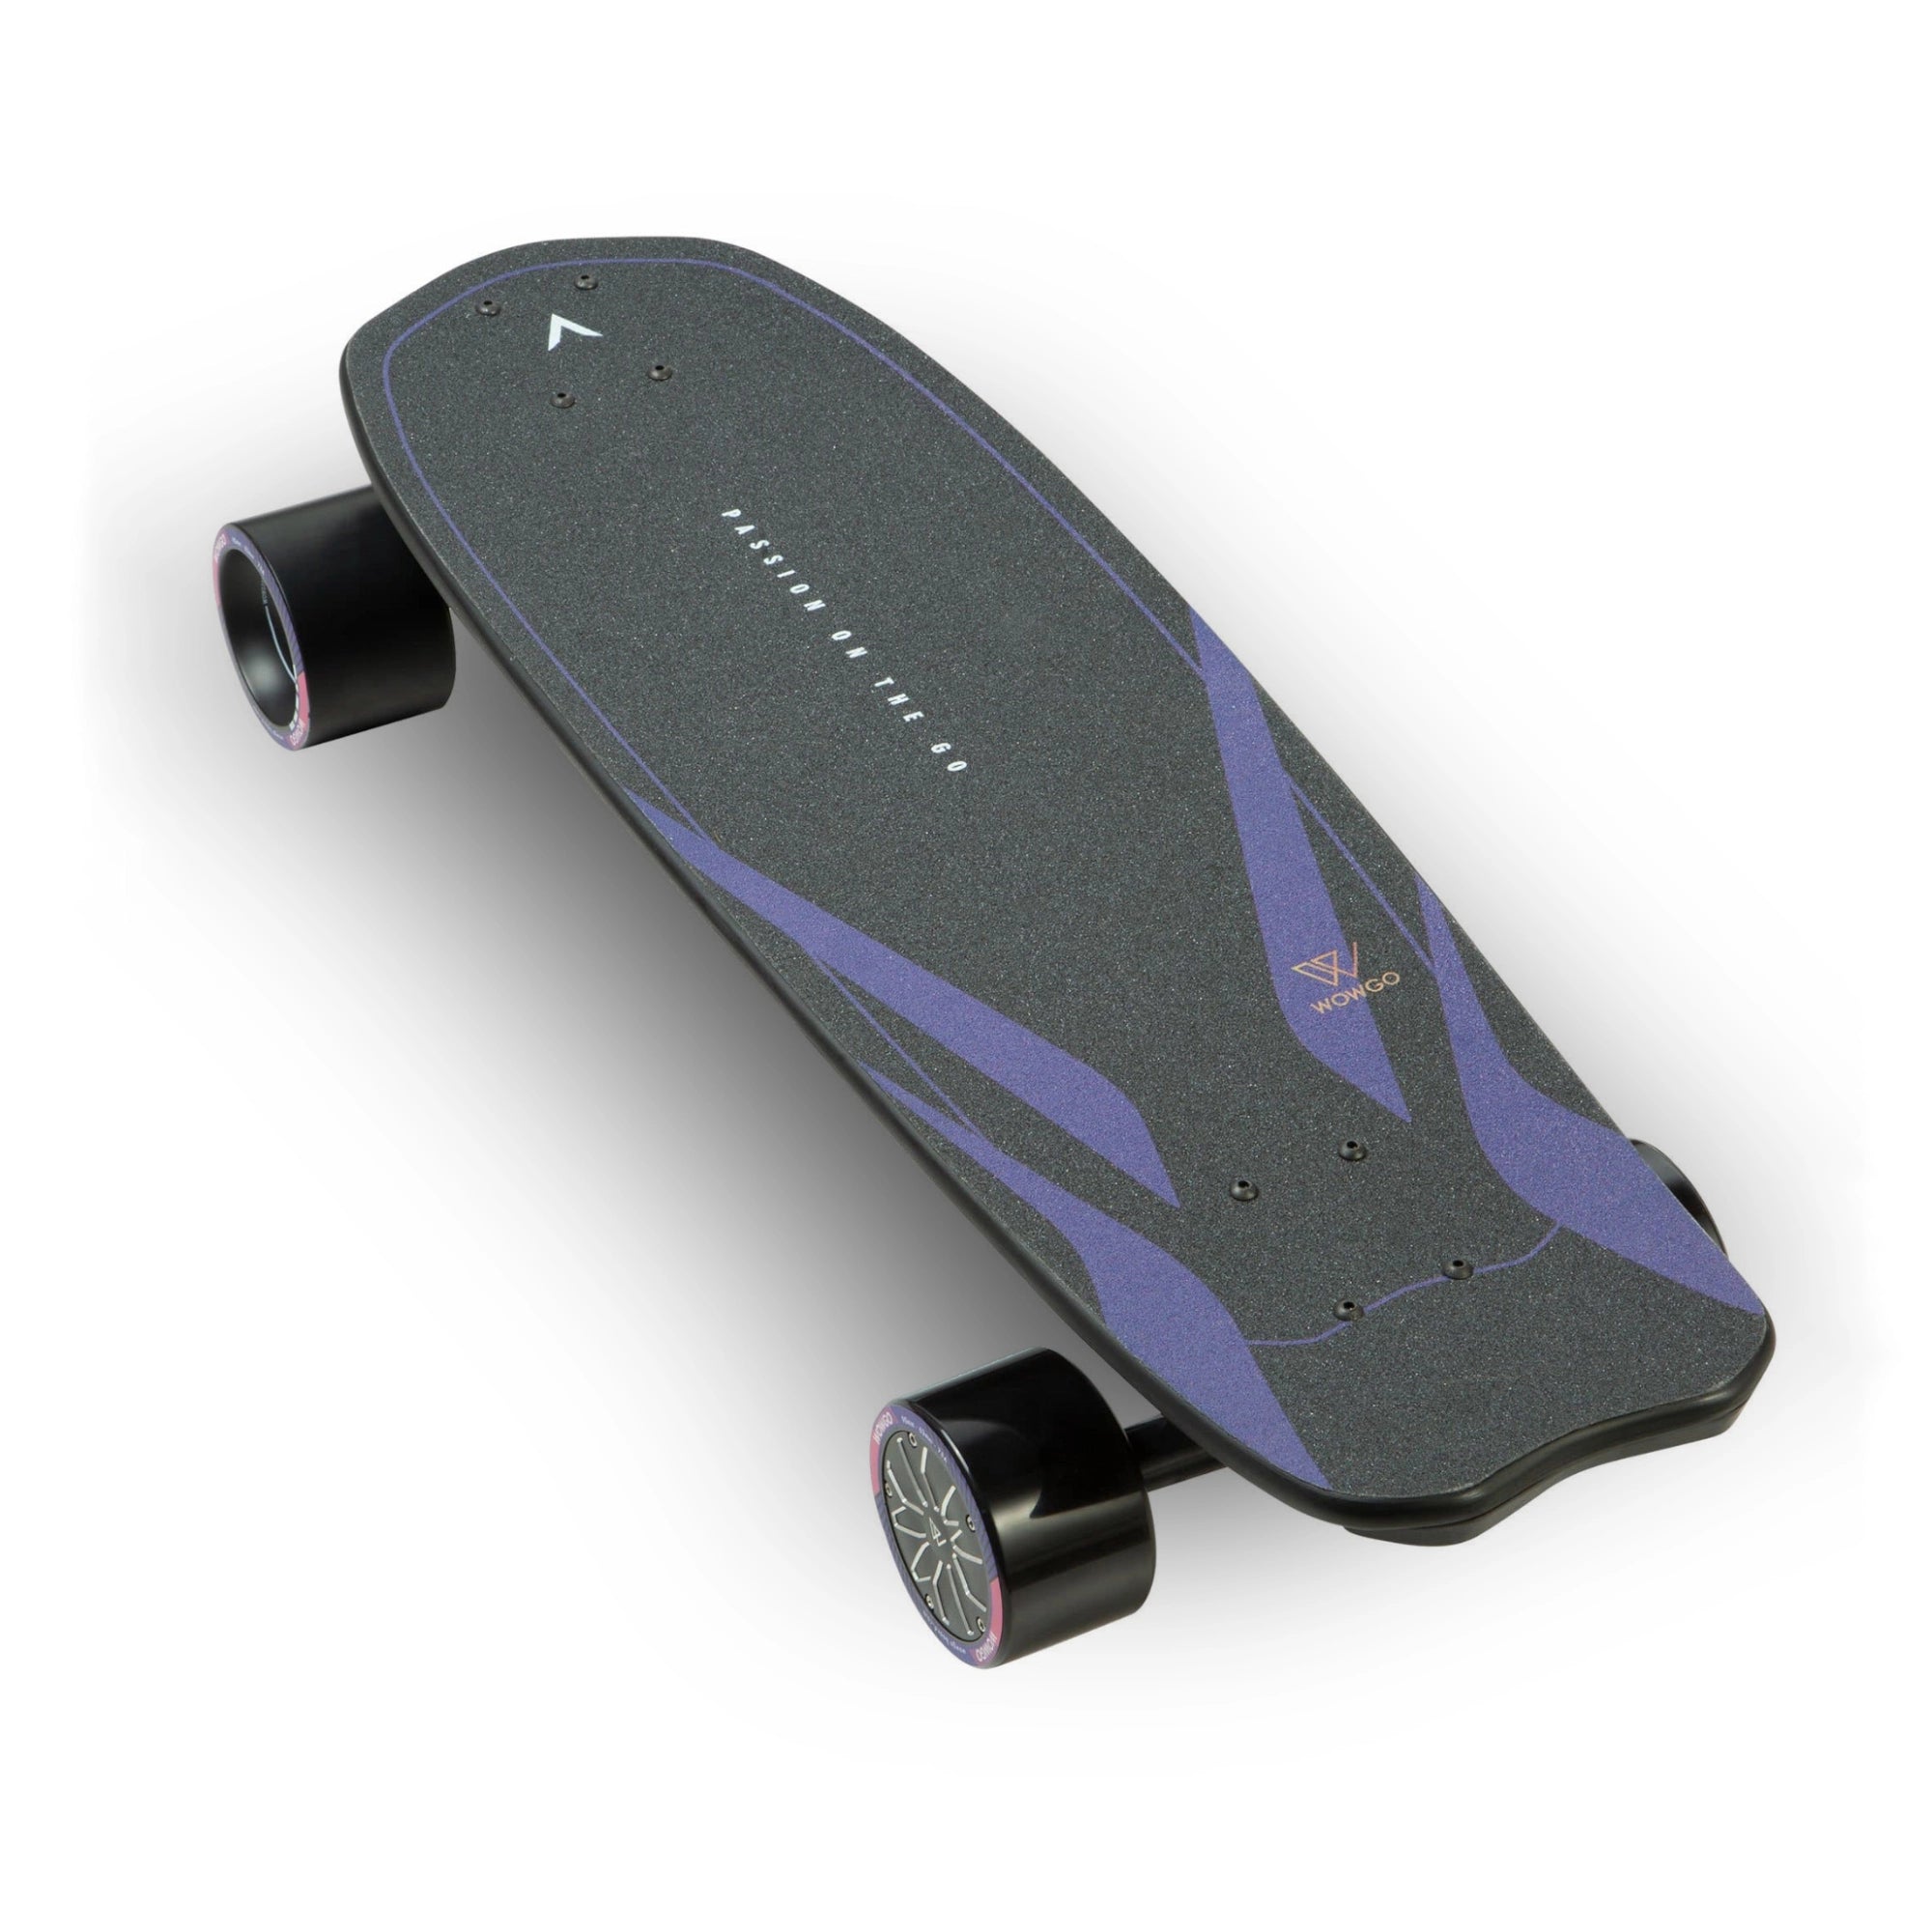 WowGo Mini 2 Electric Skateboard & Shortboard - WOWGO BOARD